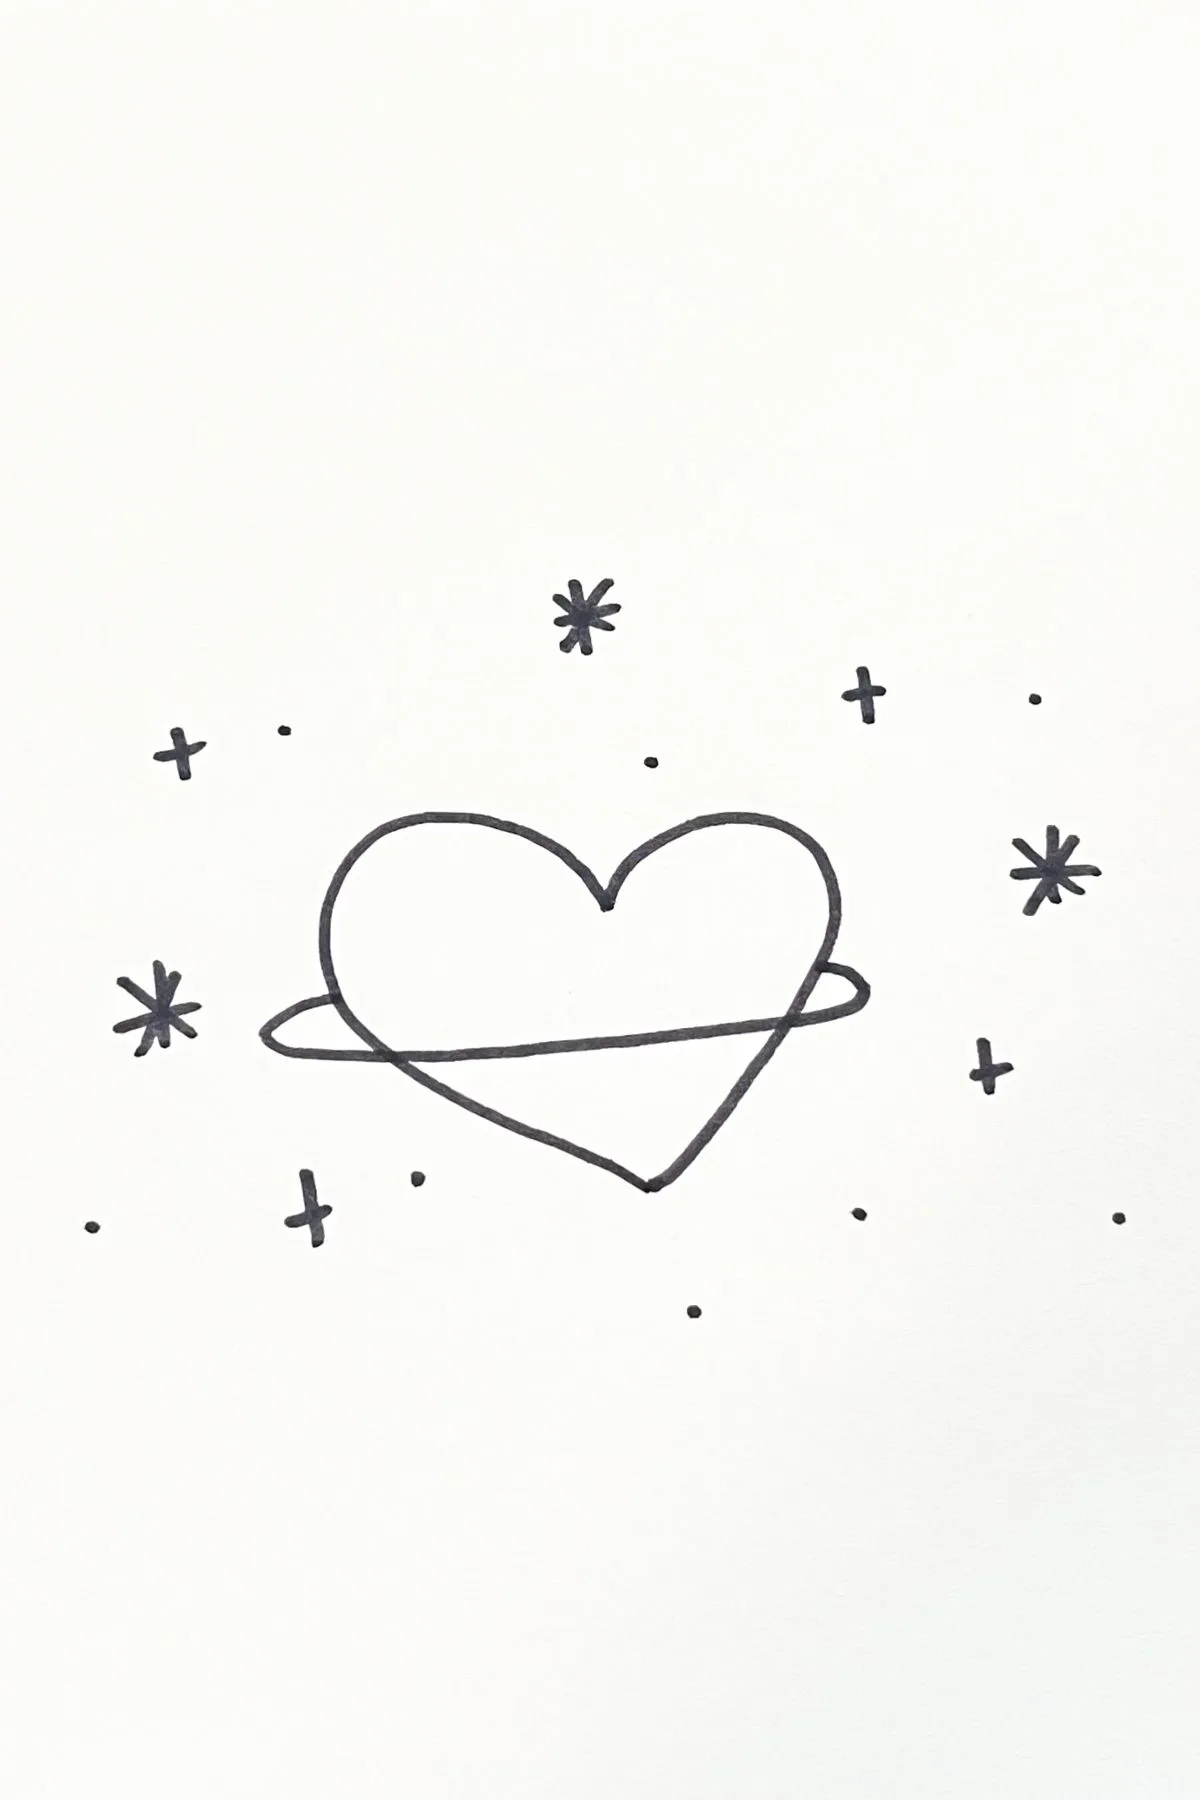 hearts and stars drawing idea